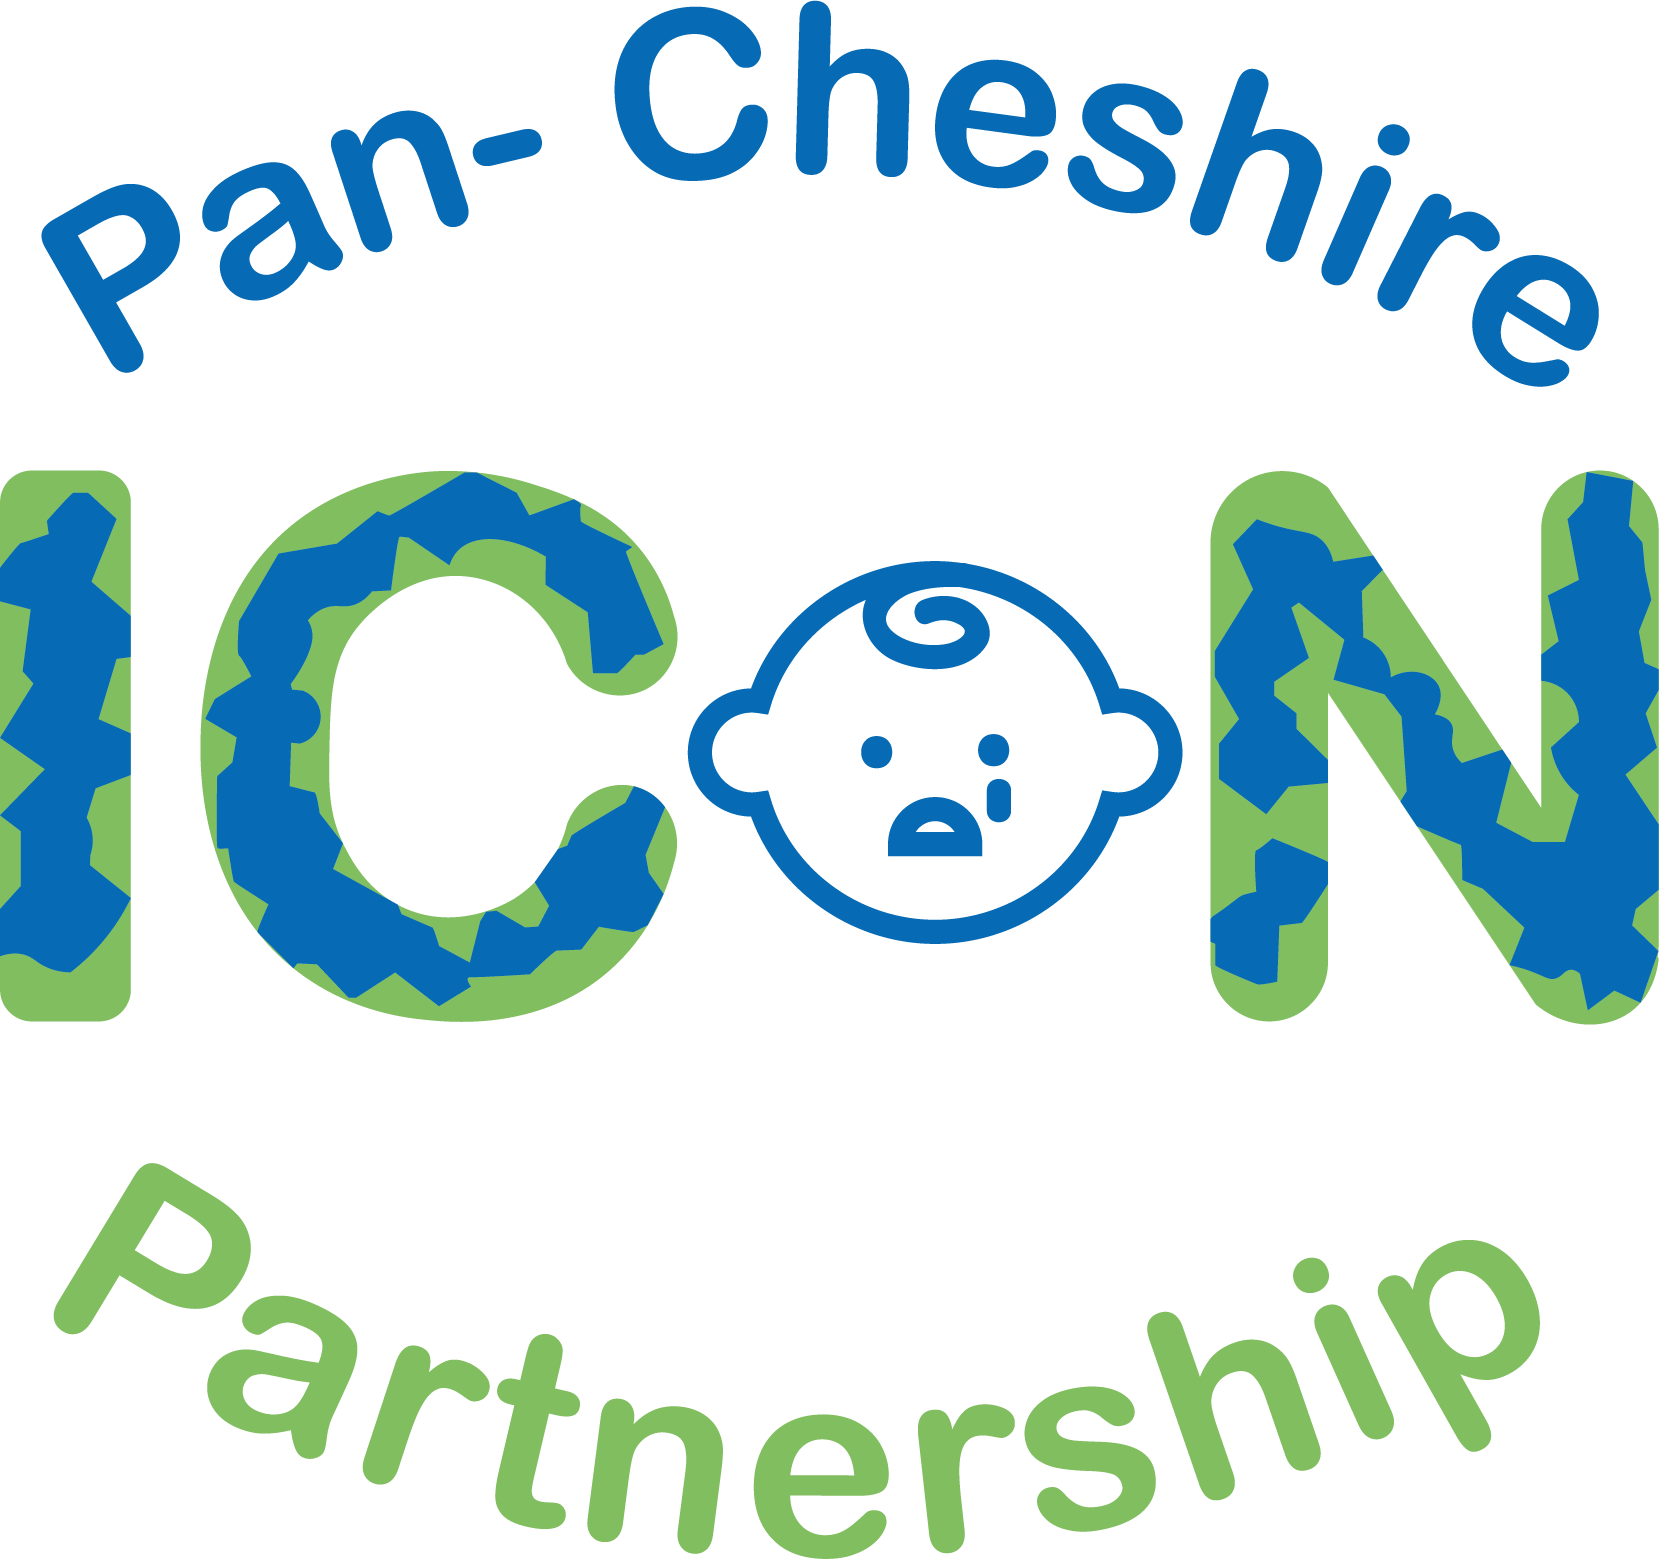 ICON logo panchesh.png